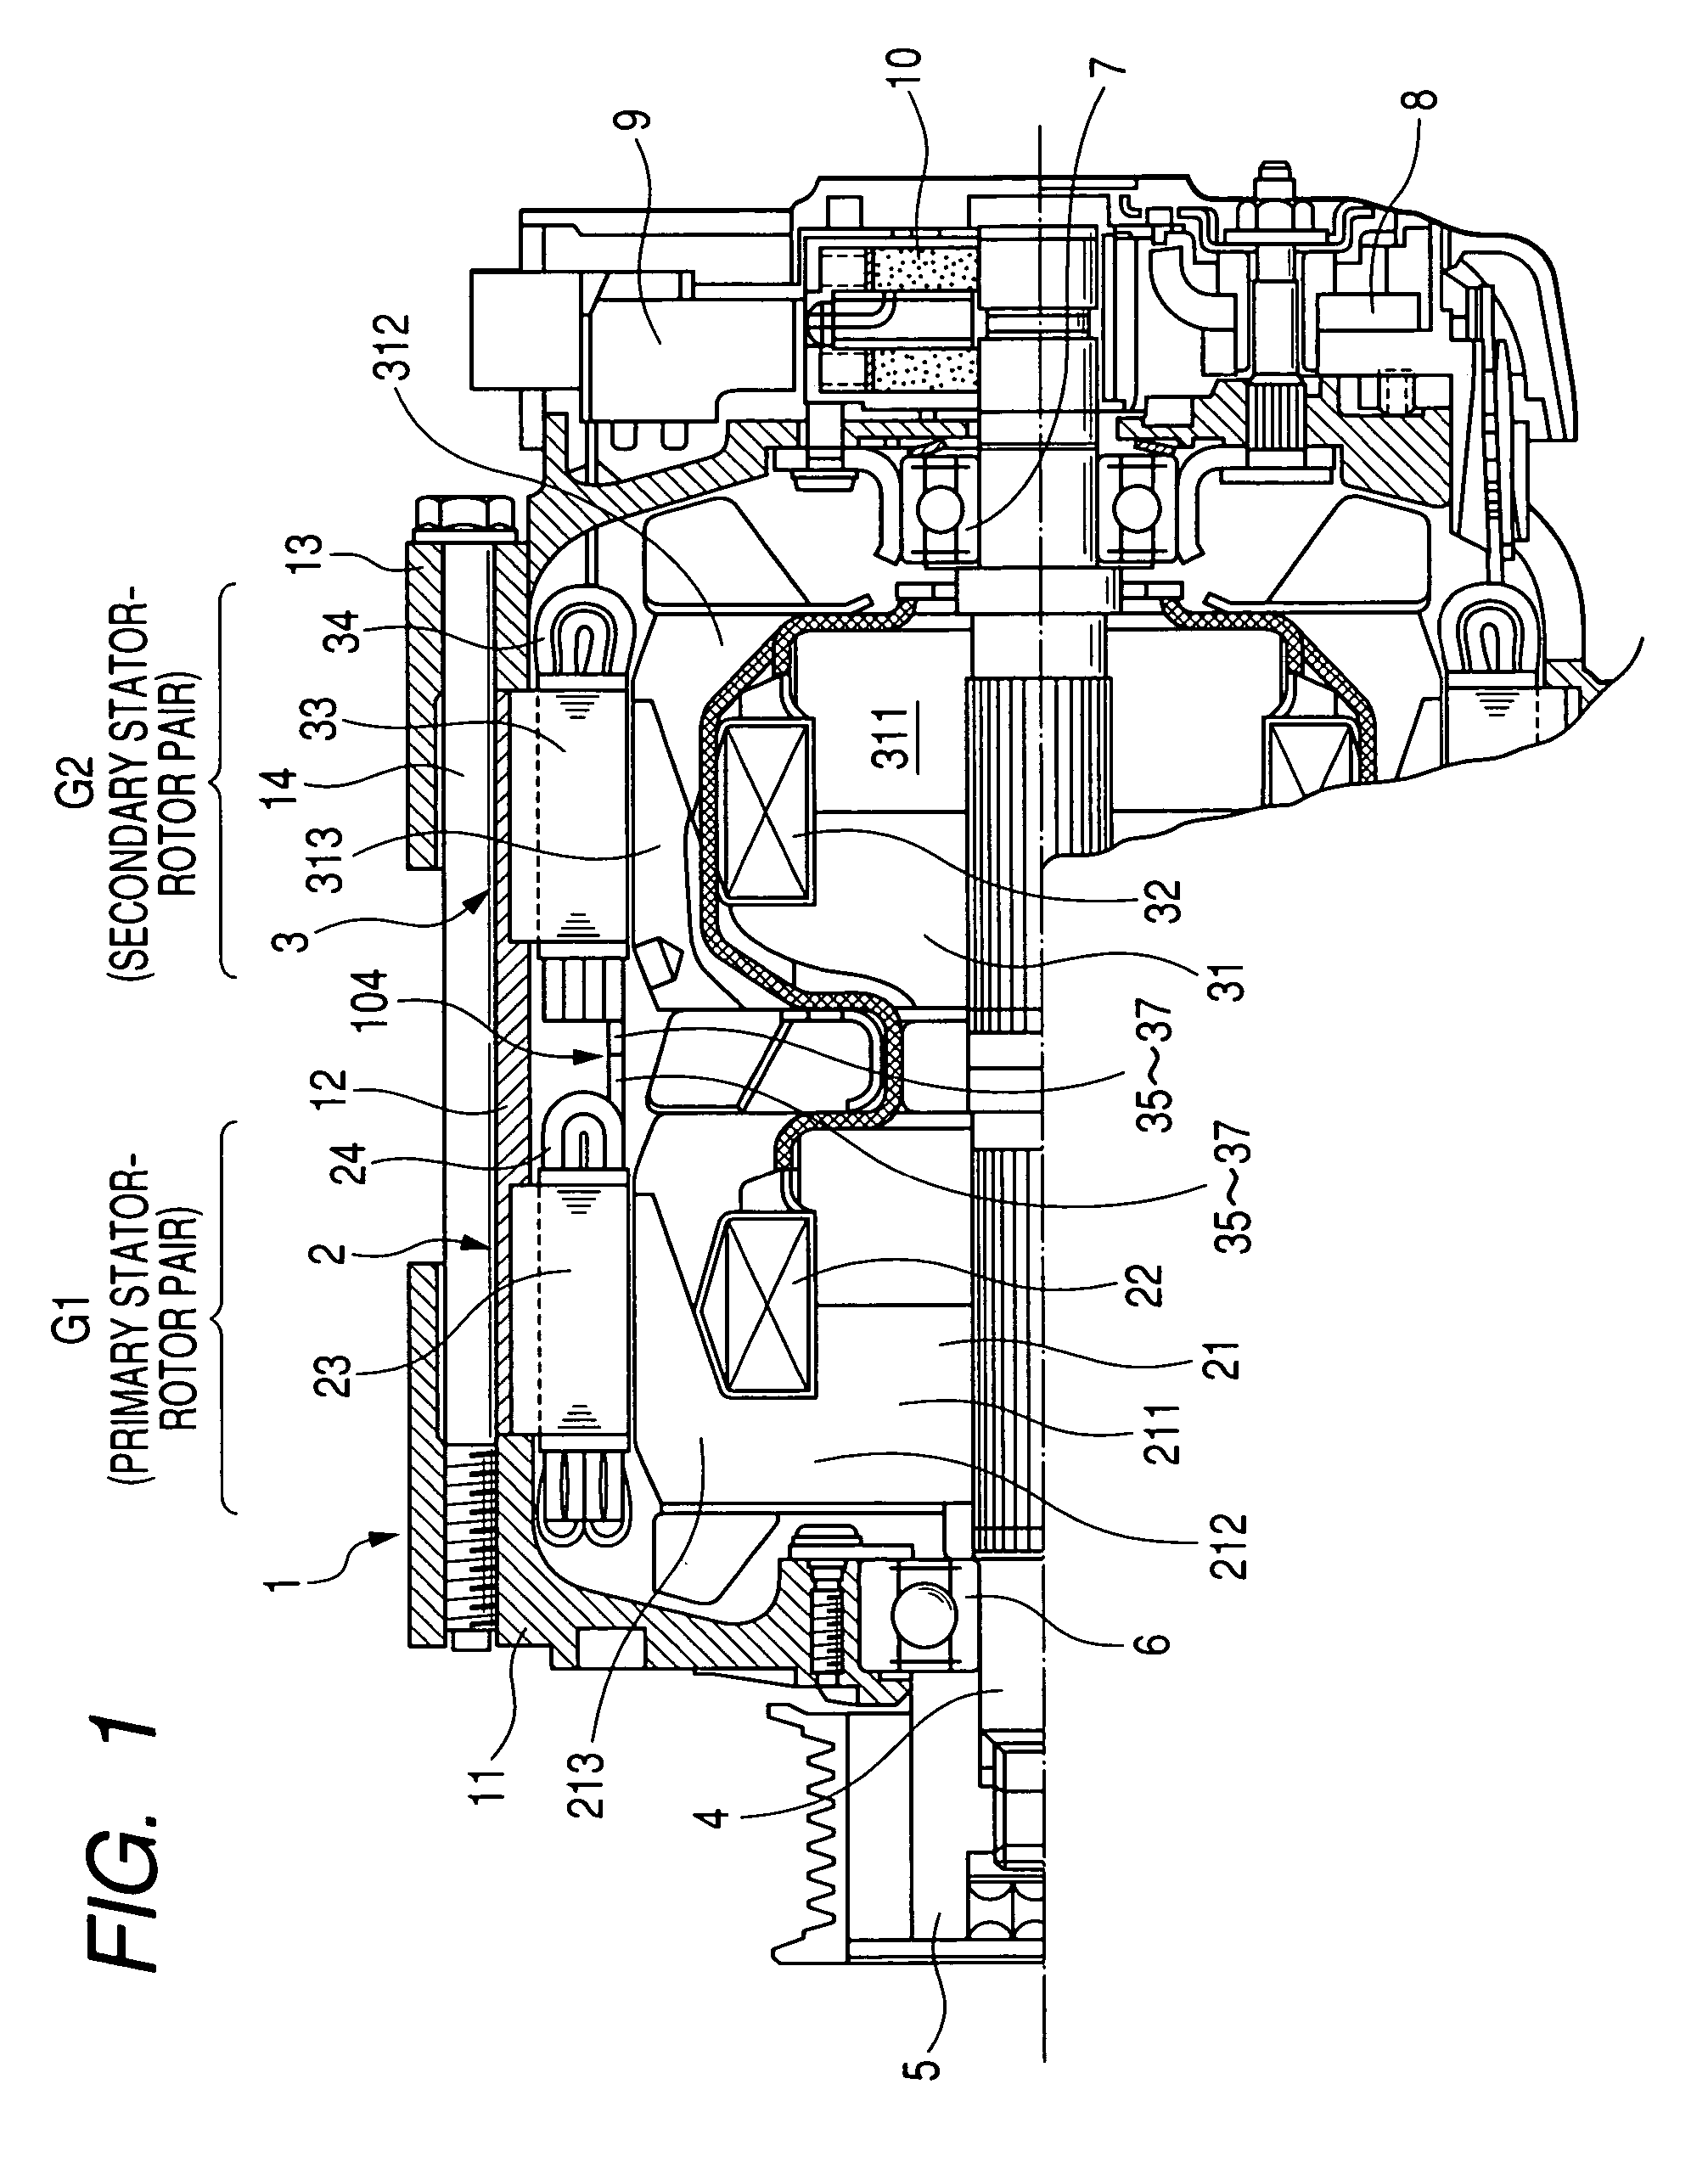 Tandem rotary electric machine